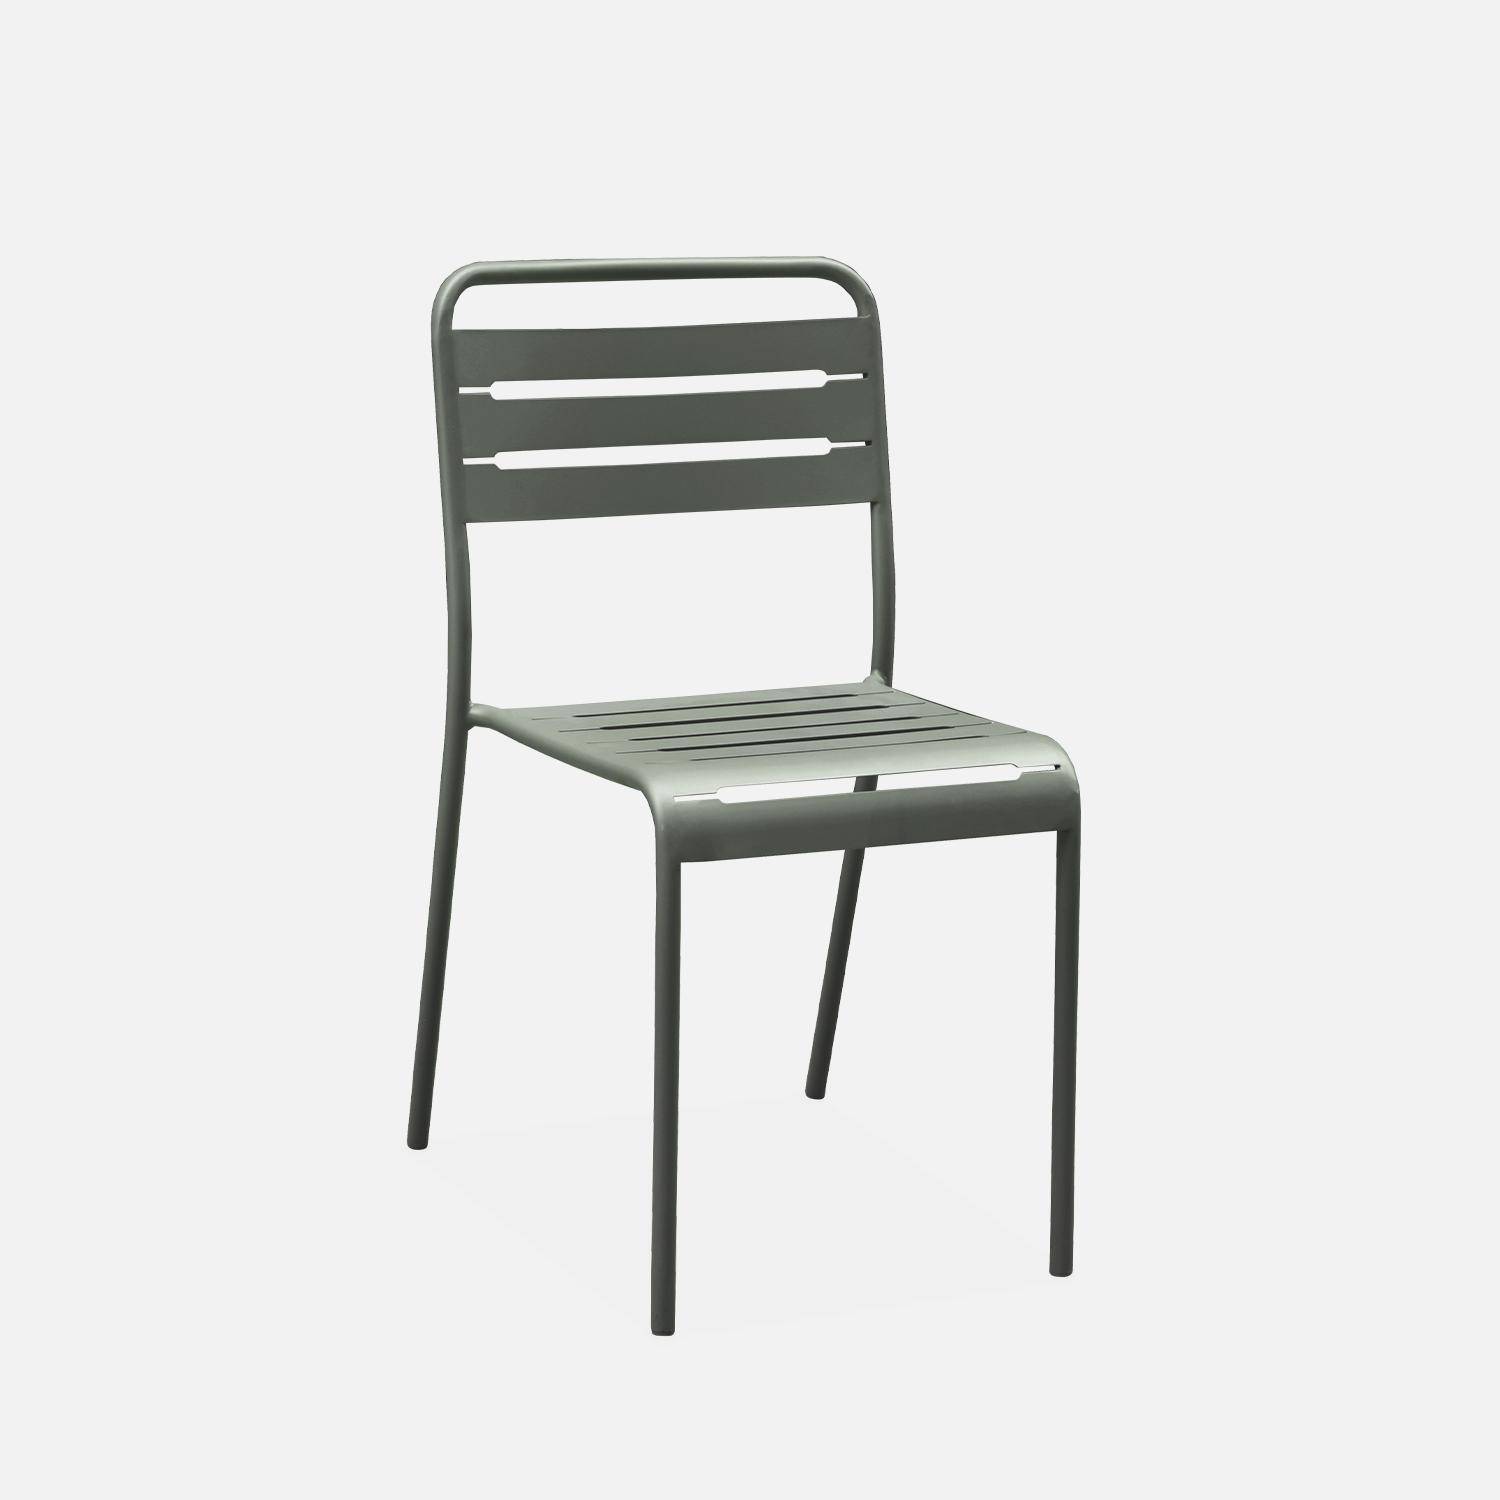 Amélia savane metalen tuintafel met 2 stoelen, latten en afgeronde hoeken, roestbestendige afwerking,sweeek,Photo7